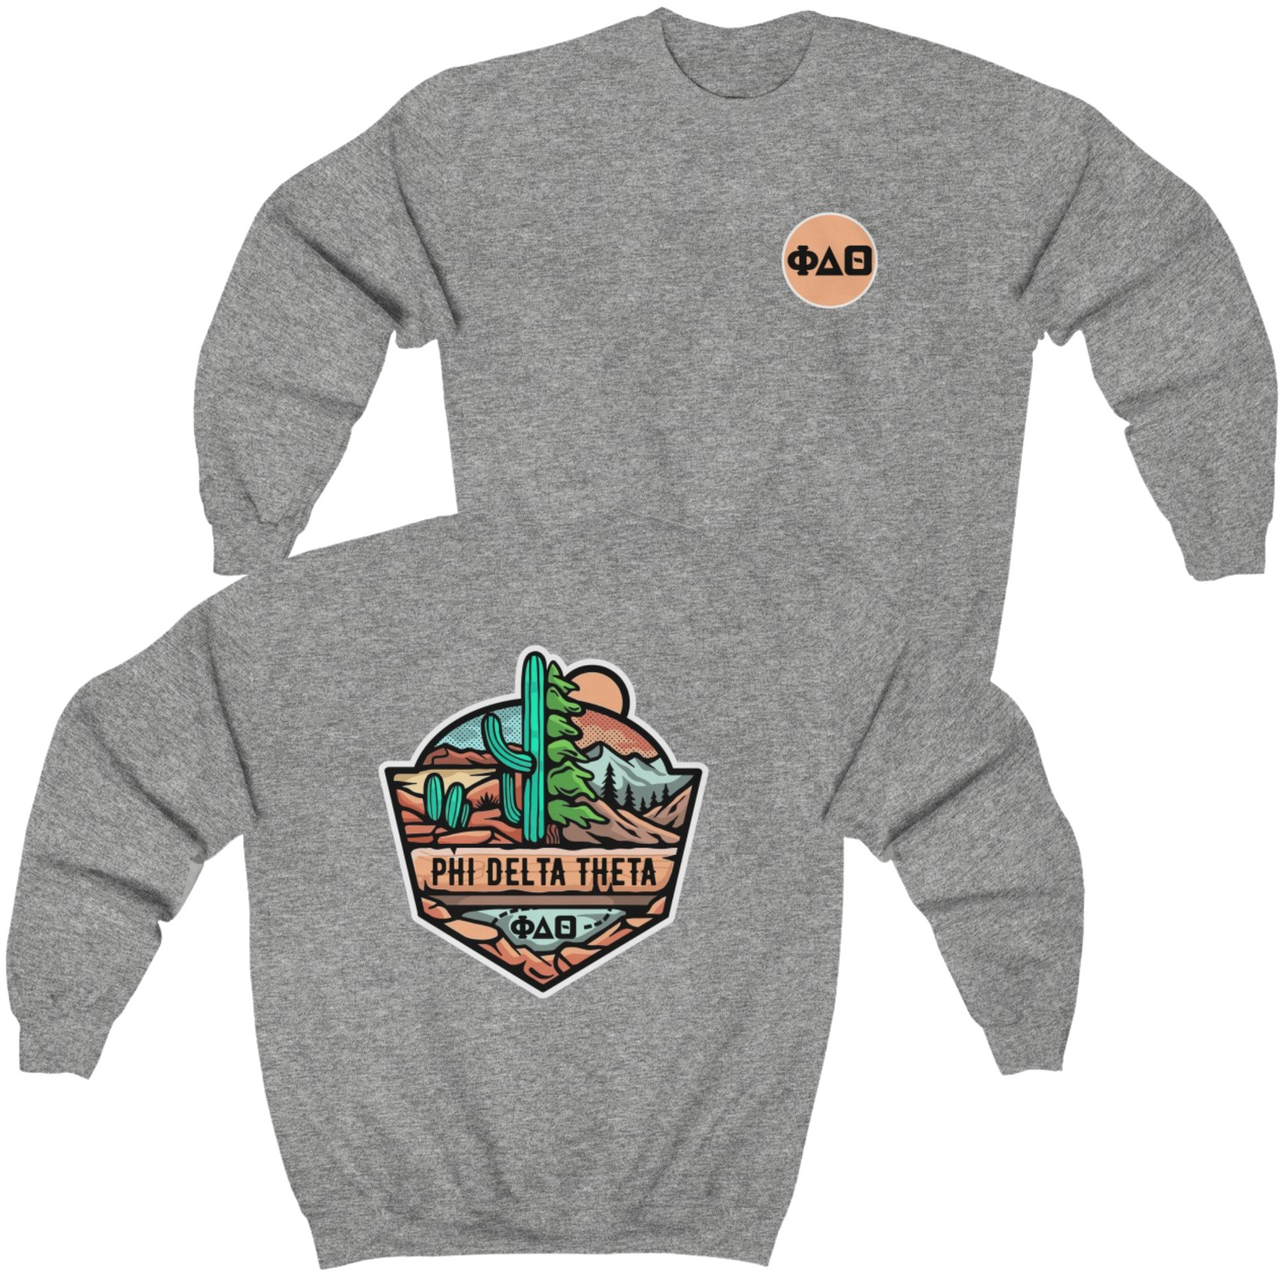 Grey Phi Delta Theta Graphic Crewneck Sweatshirt | Desert Mountains | phi delta theta fraternity greek apparel